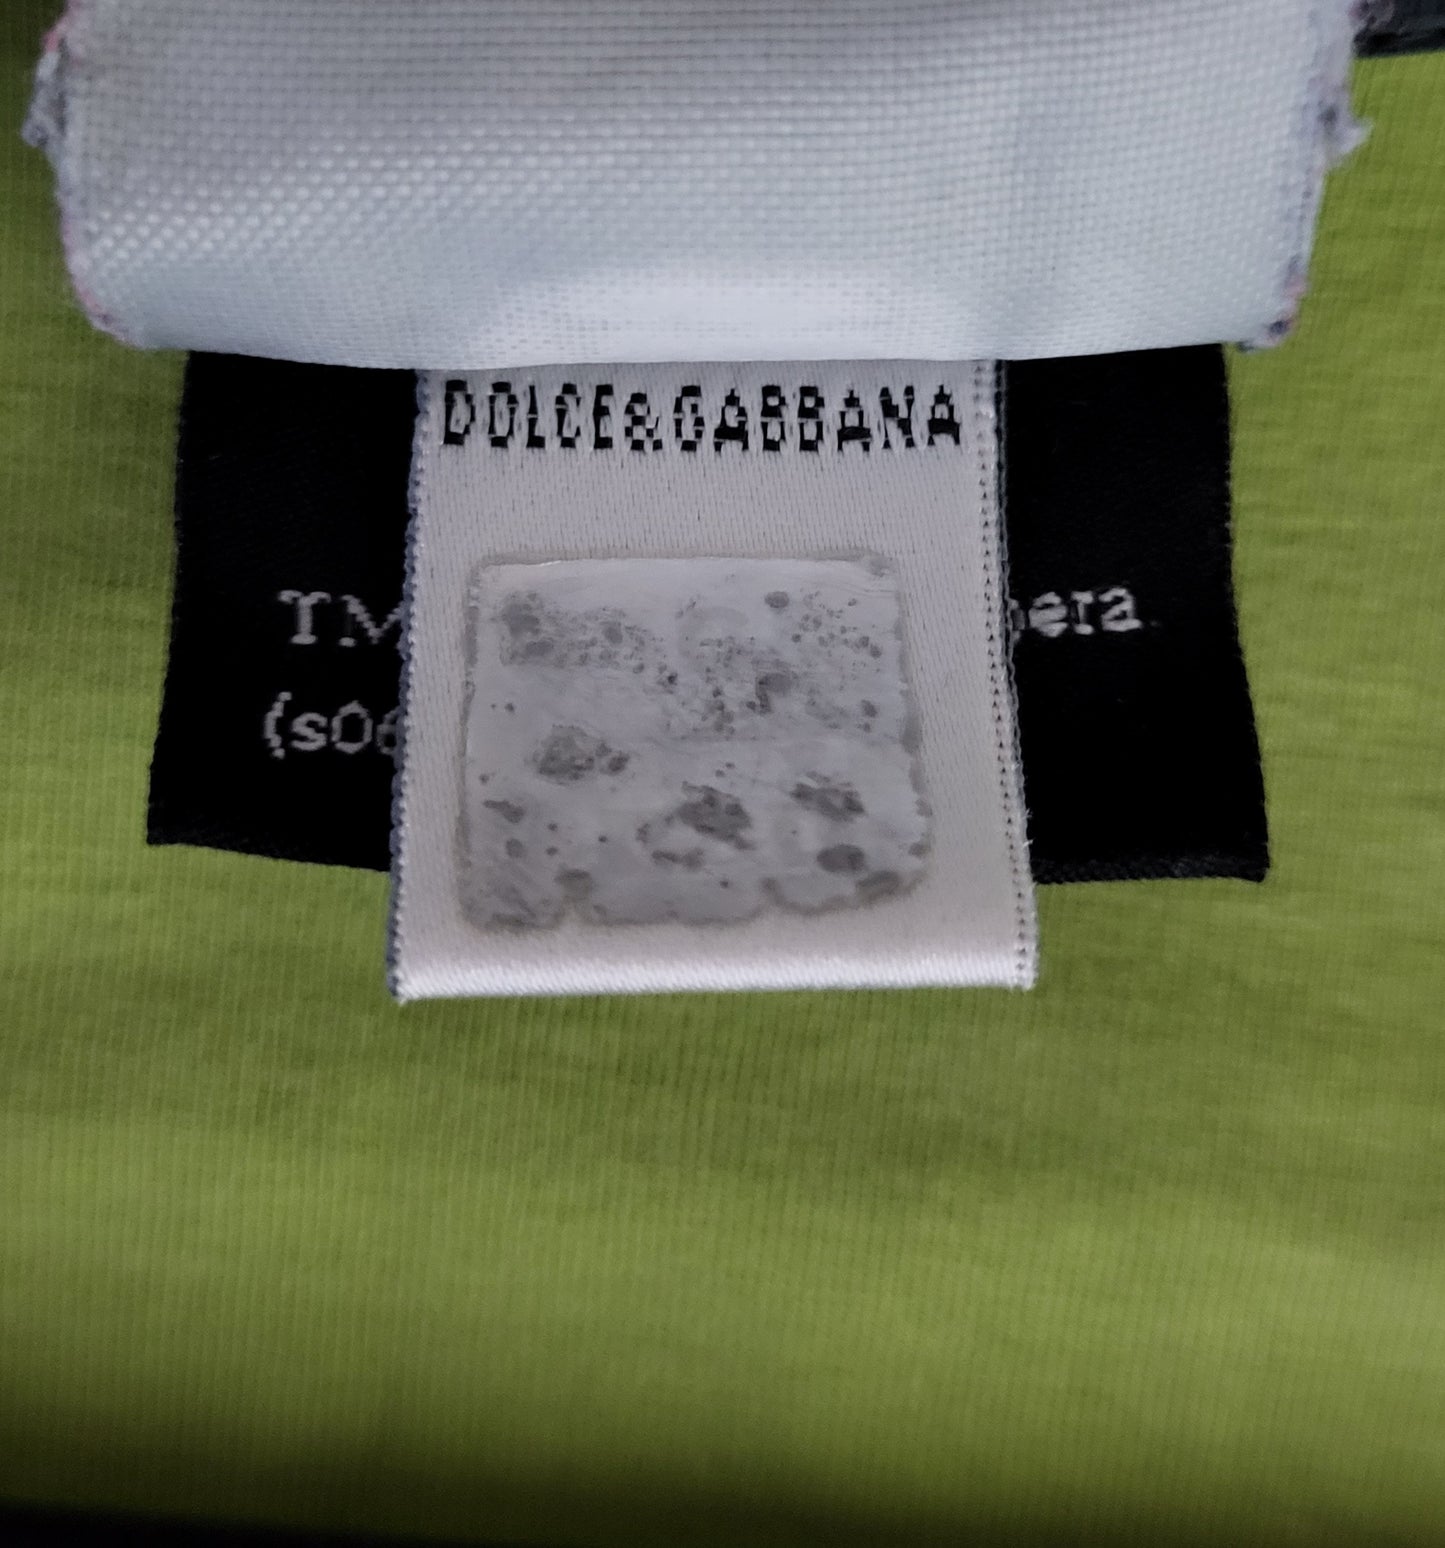 Dolce & Gabbana - T-Shirt - Limited Edition - Dunkelgrau - Herren - M